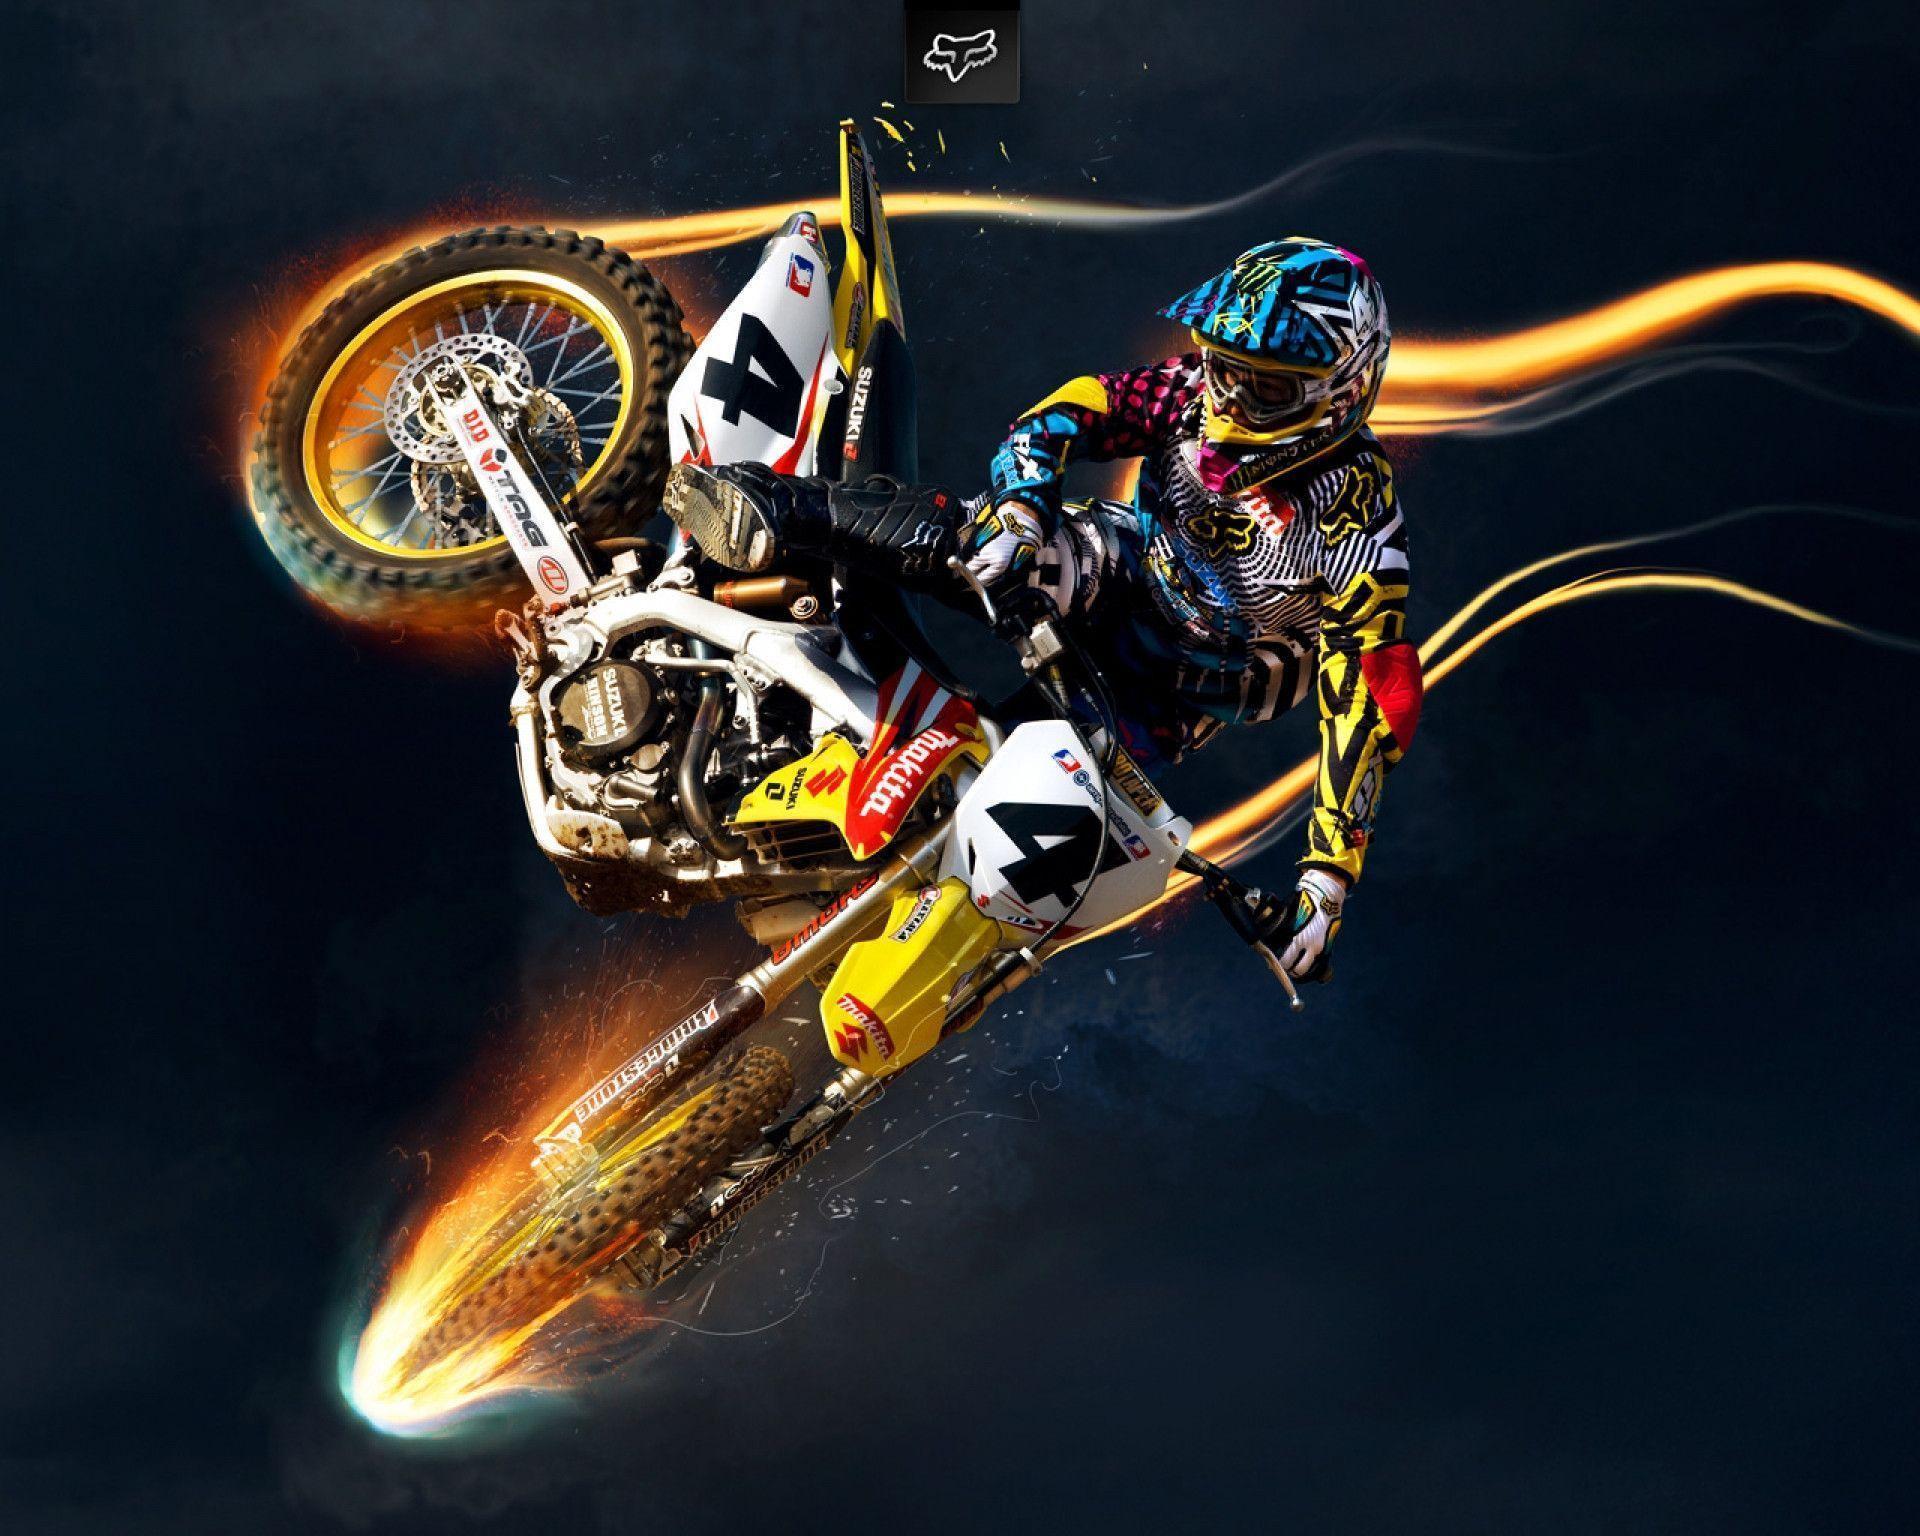 Motocross HD Wallpaper Car Picture